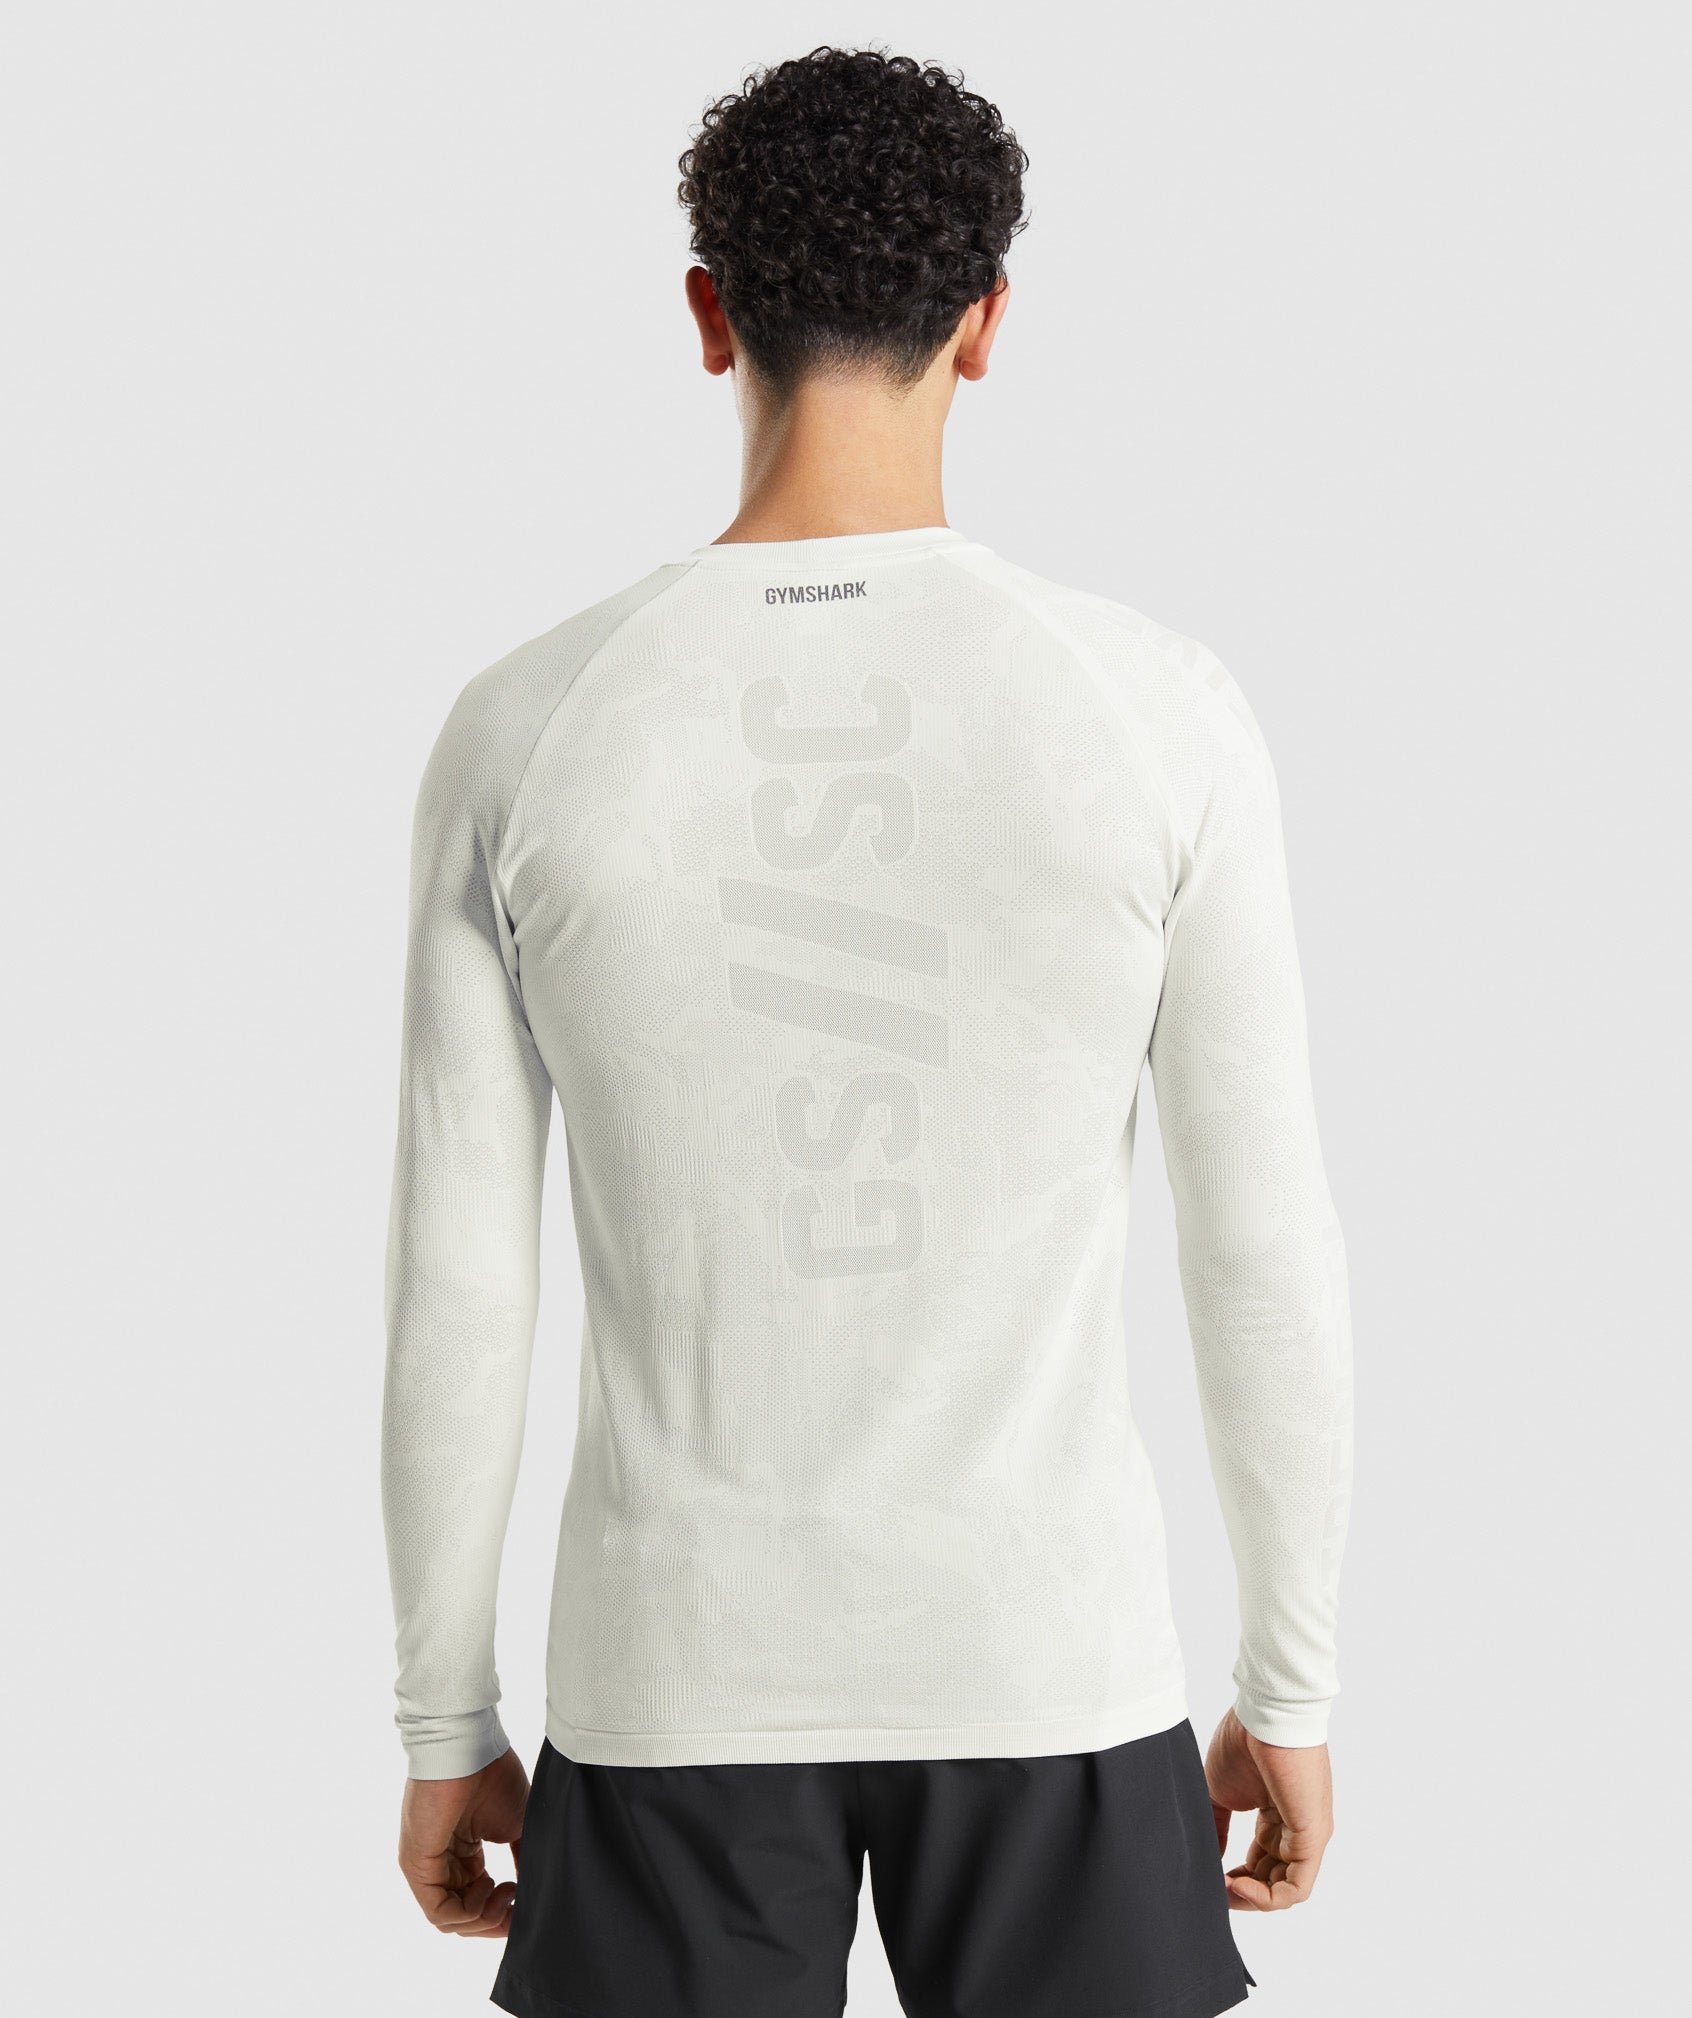 Gymshark//Steve Cook Long Sleeve Seamless T-Shirt in Off White/Light Grey - view 1